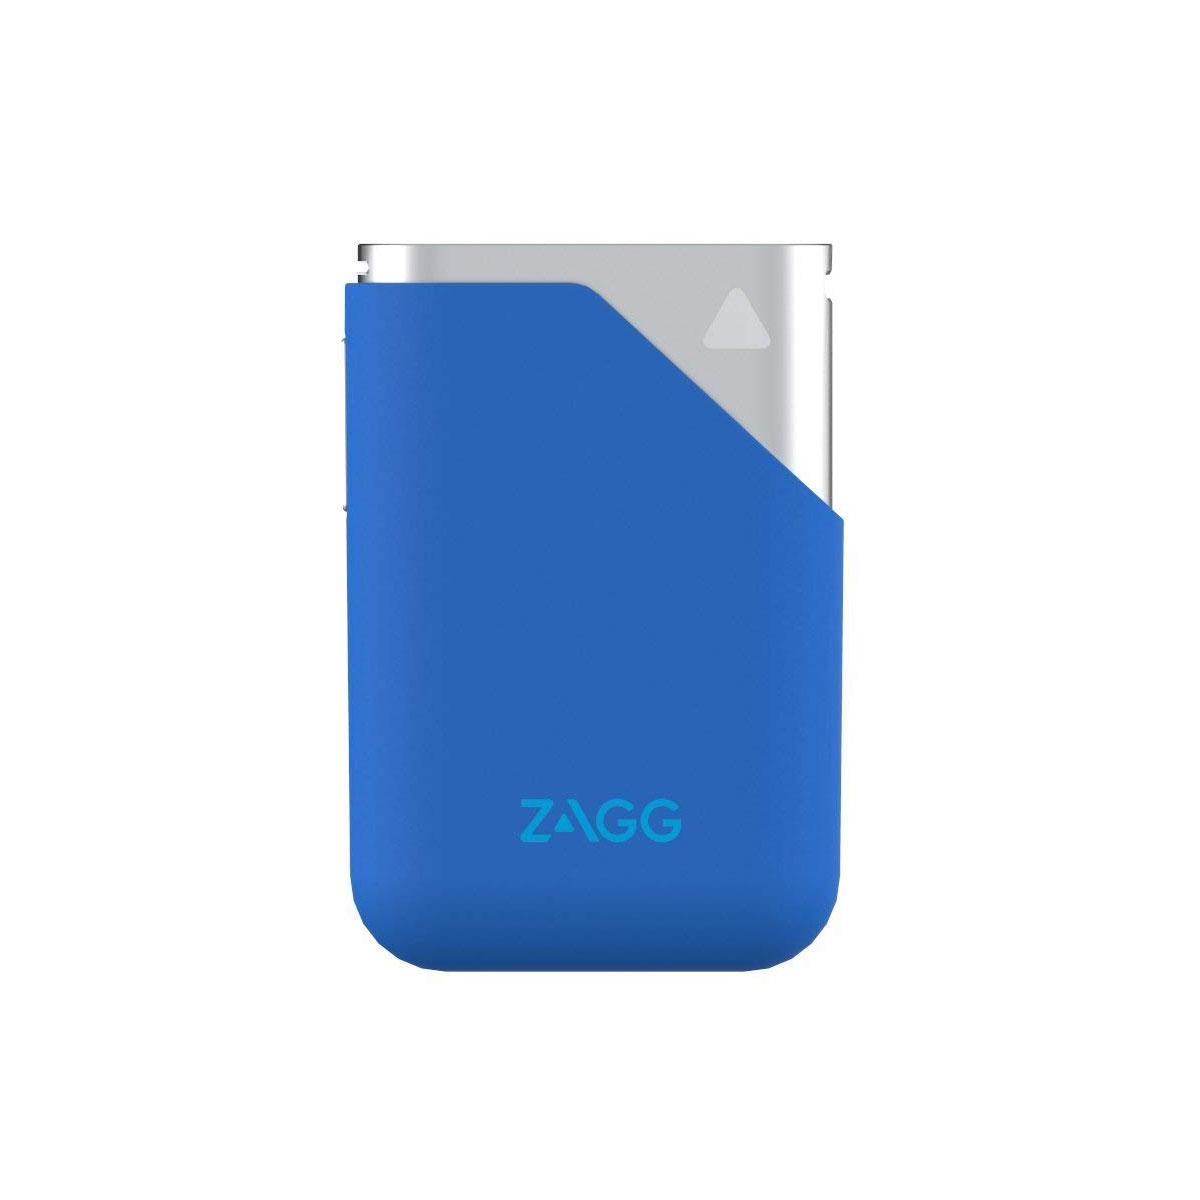 Zagg Power-Amp 6 Powerbank 6K mAh - Blue